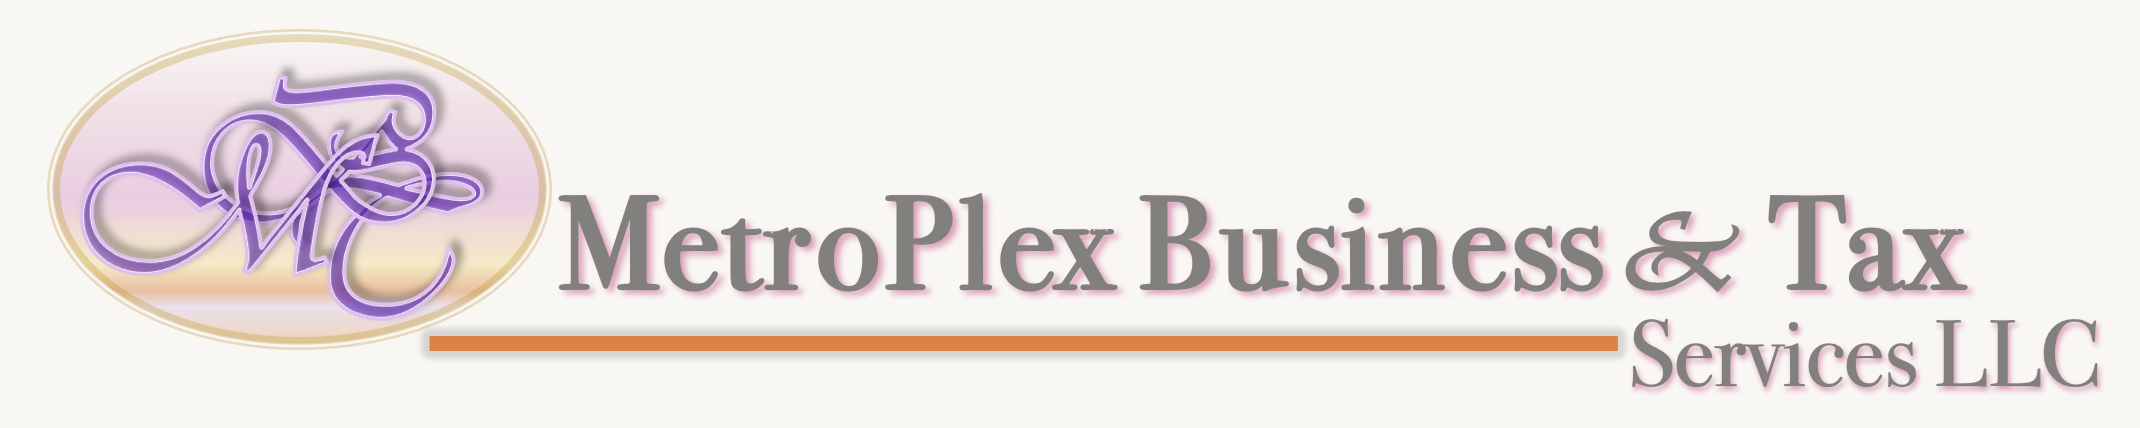 MetroPlex Business & Tax Services LLC